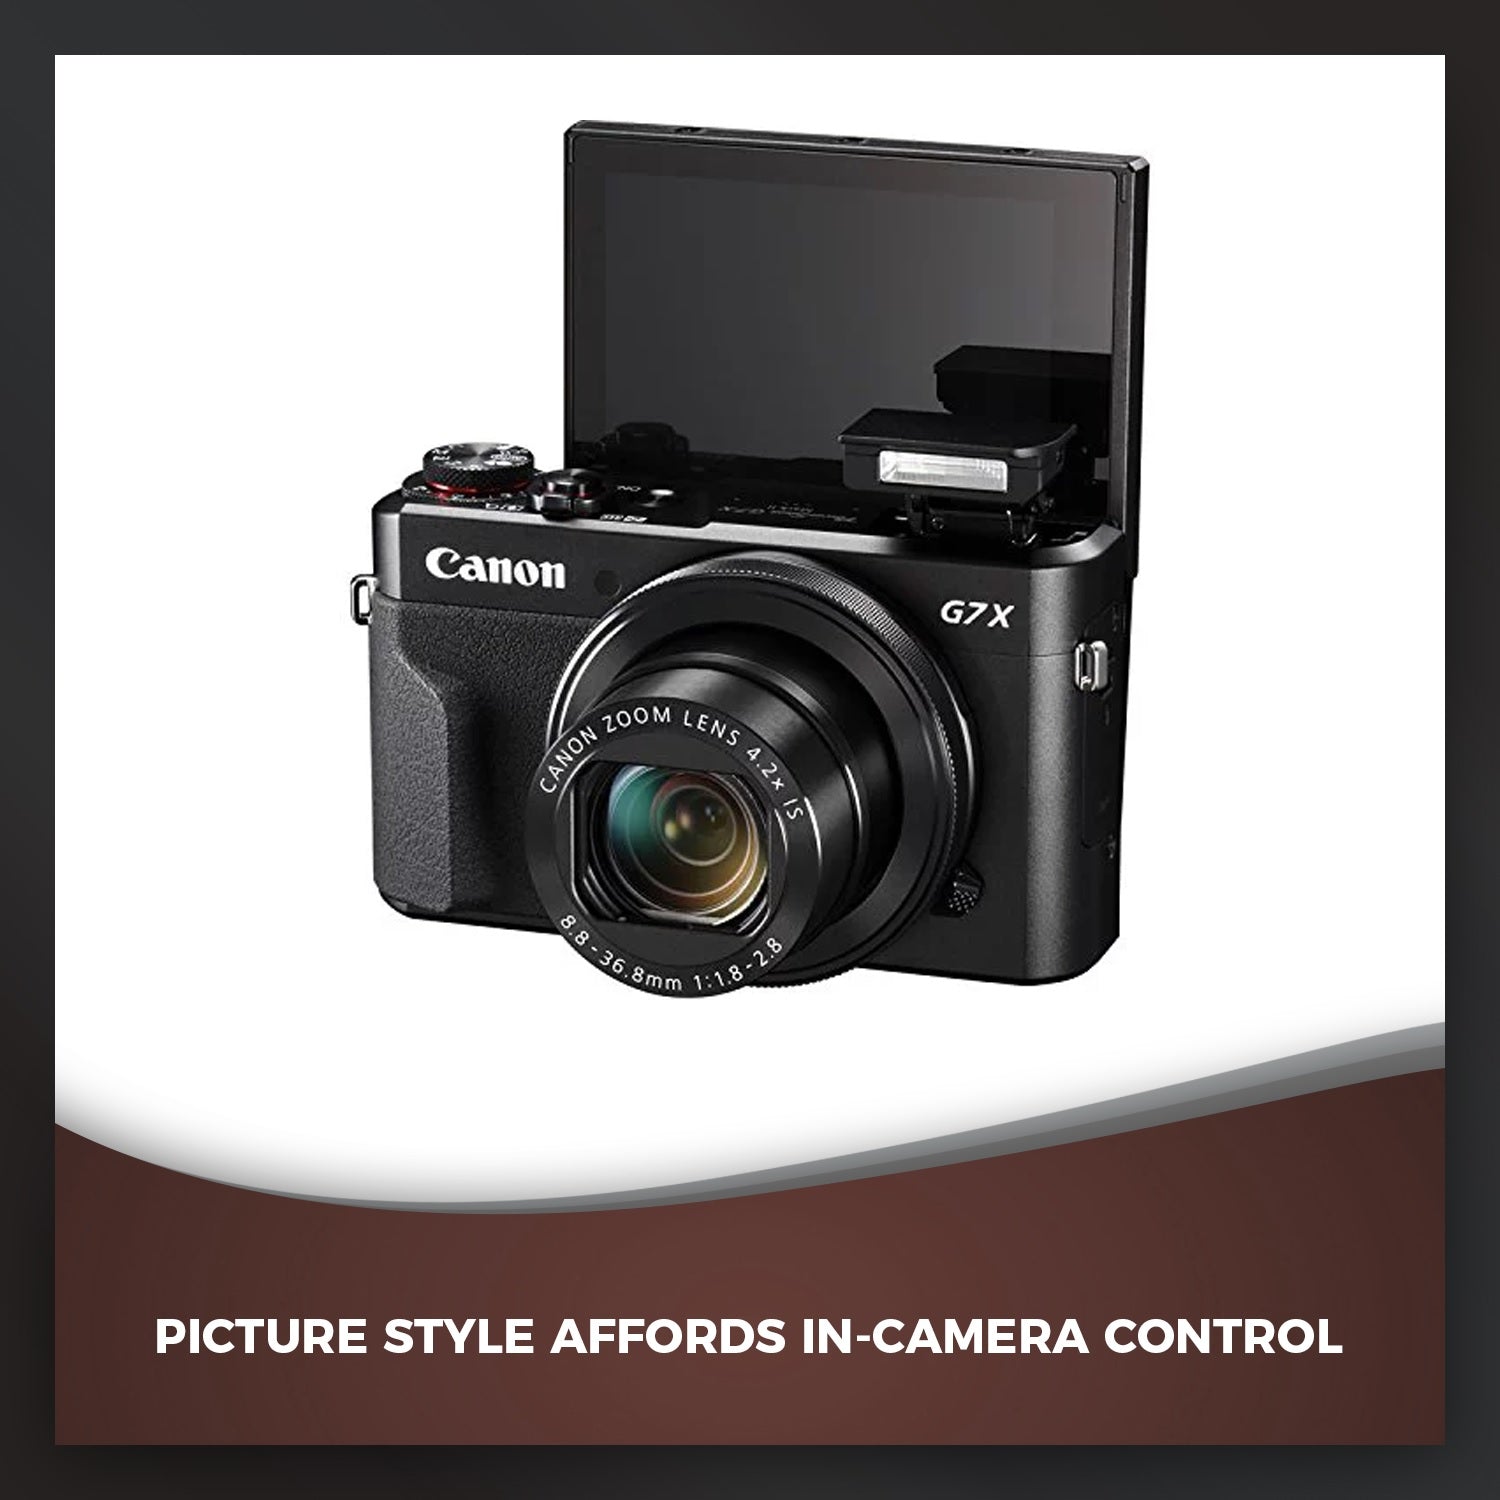 Canon PowerShot G7 X Mark II Digital Camera (International Model) - Premium Kit